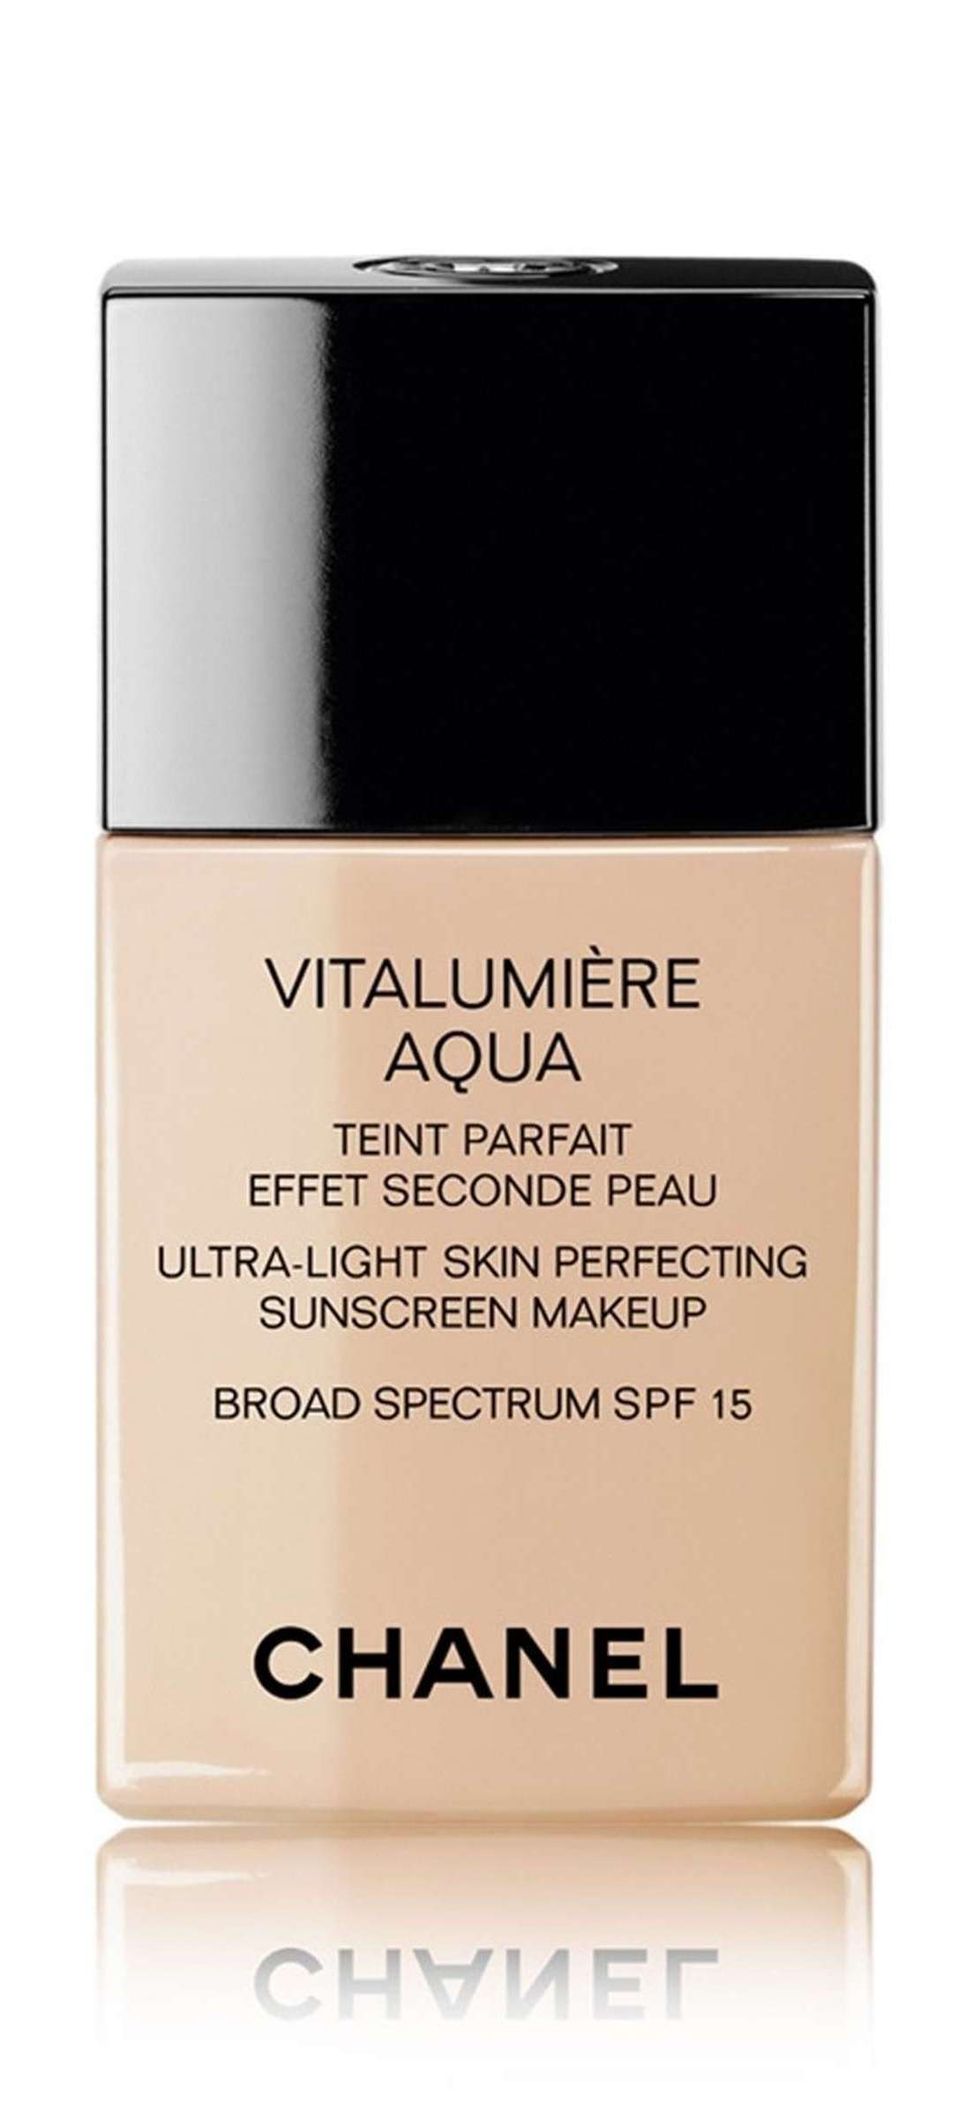 Chanel Vitalumiere Aqua Ultra Light Skin Perfecting Makeup Review